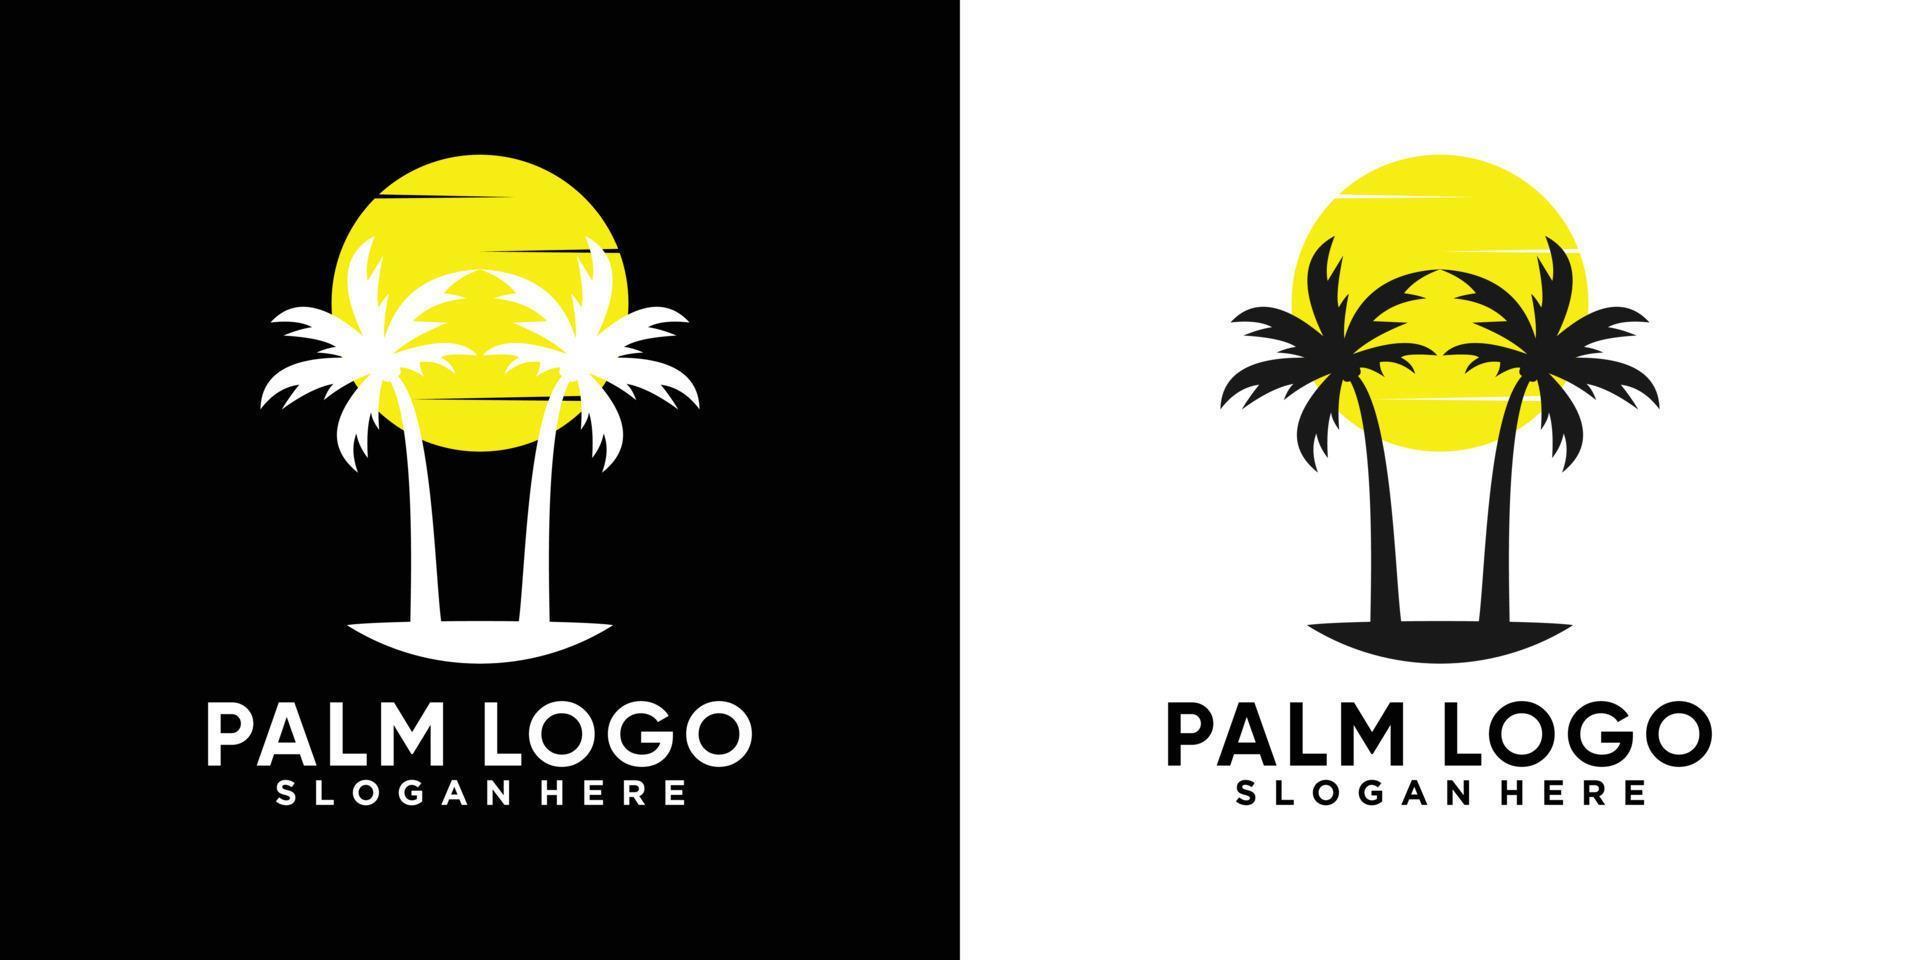 palm logo design with stlye and creative concept vector